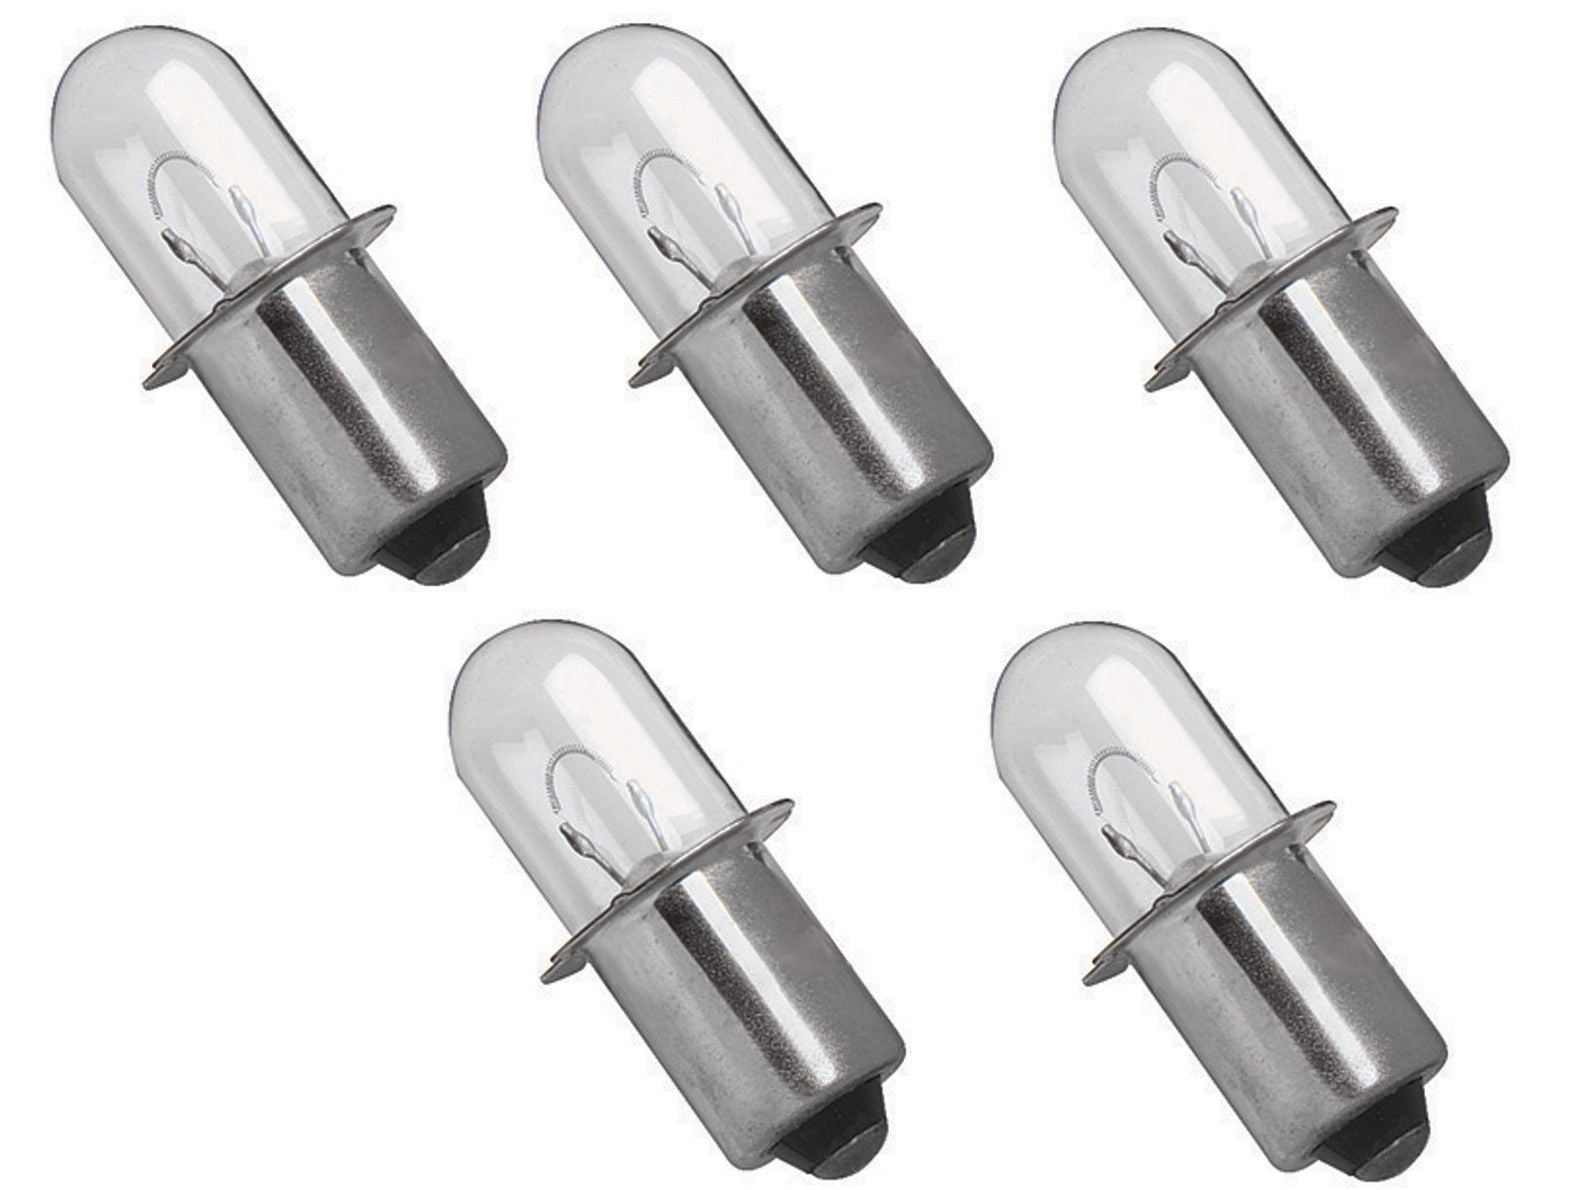 For DEWALT 18V Xenon Flashlight Bulbs Replaces #DW9083 DW908 DW919 DC509-4PCS 